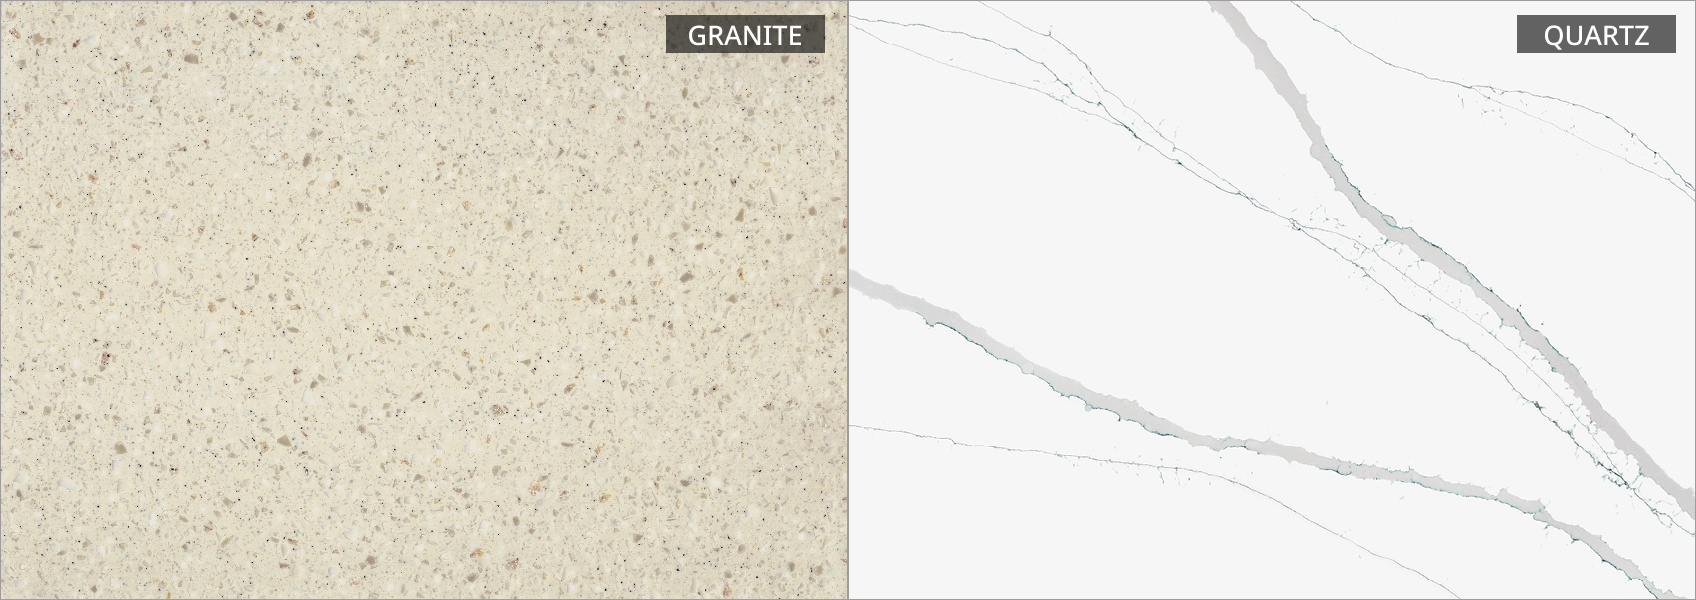 https://www.lxhausys.com/us/blog/wp-content/uploads/2023/02/Granite-and-Quartz-surface-materials.png